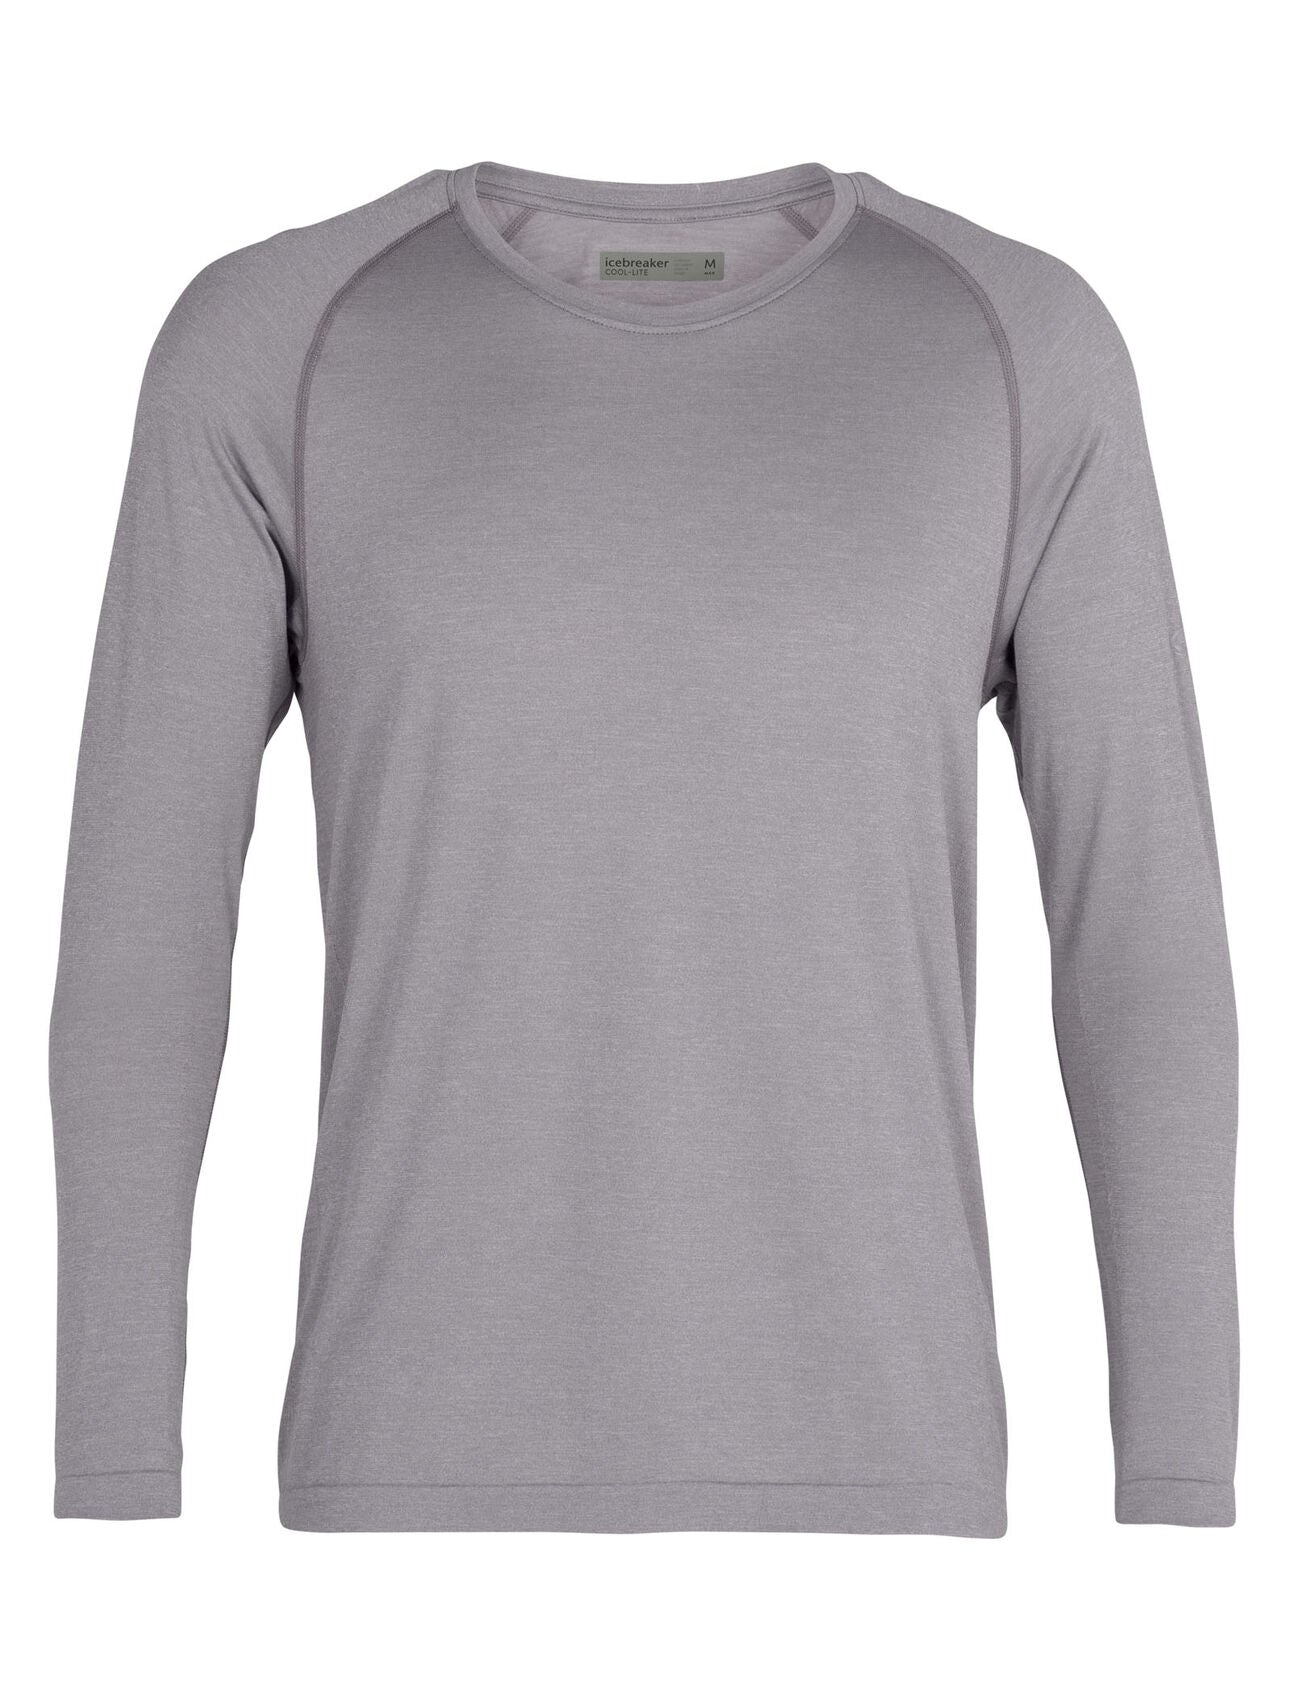 Cool Gray Raglan Full Sleeves T-shirt